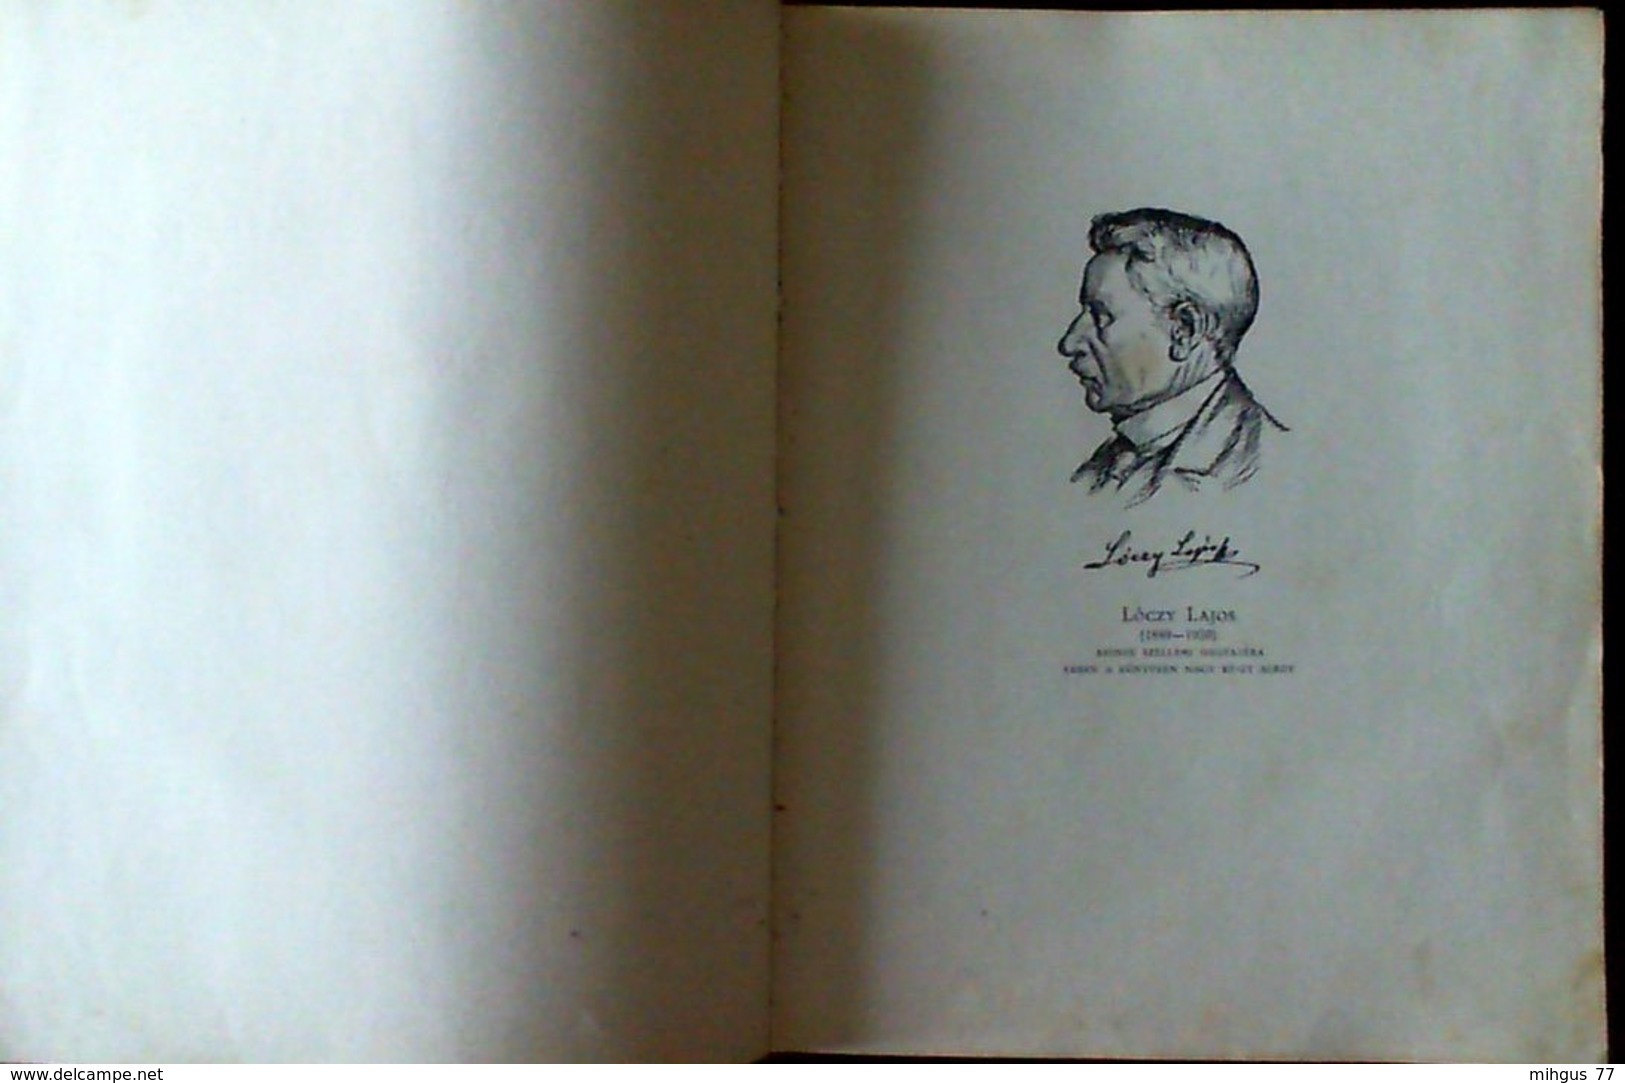 1938 HUNGARY MAGYAR FOLD MAGYAR FAJ  IV Kotetben - Enciclopedie